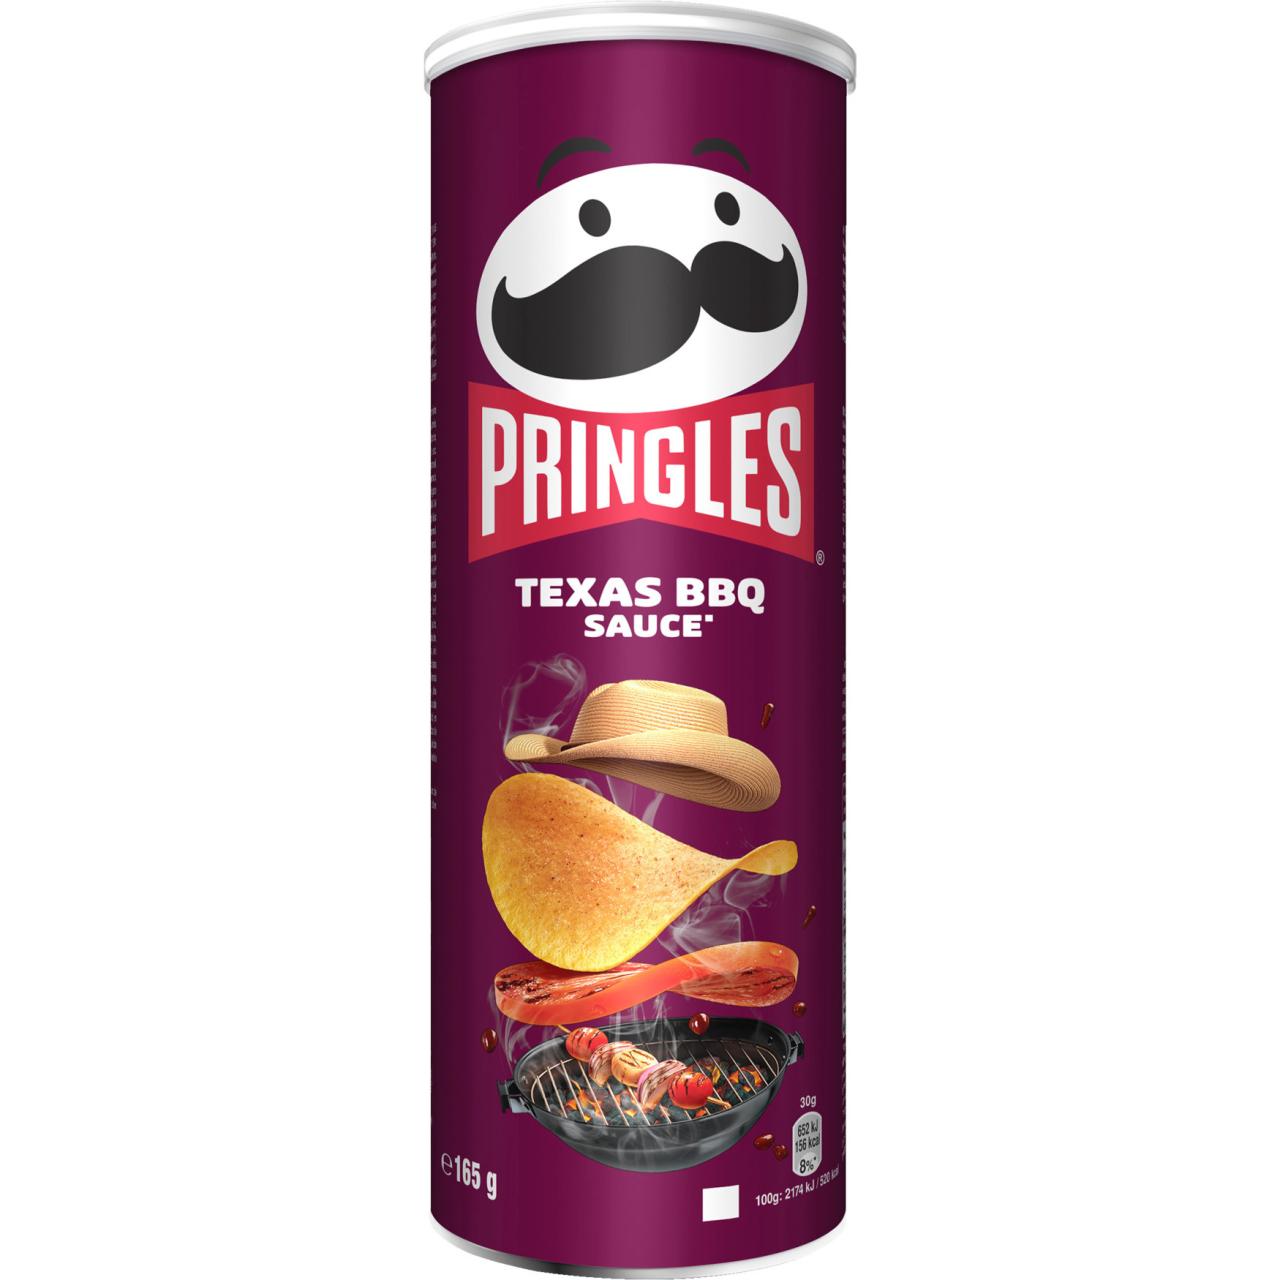 Pringles Texas BBQ Sauce 165g